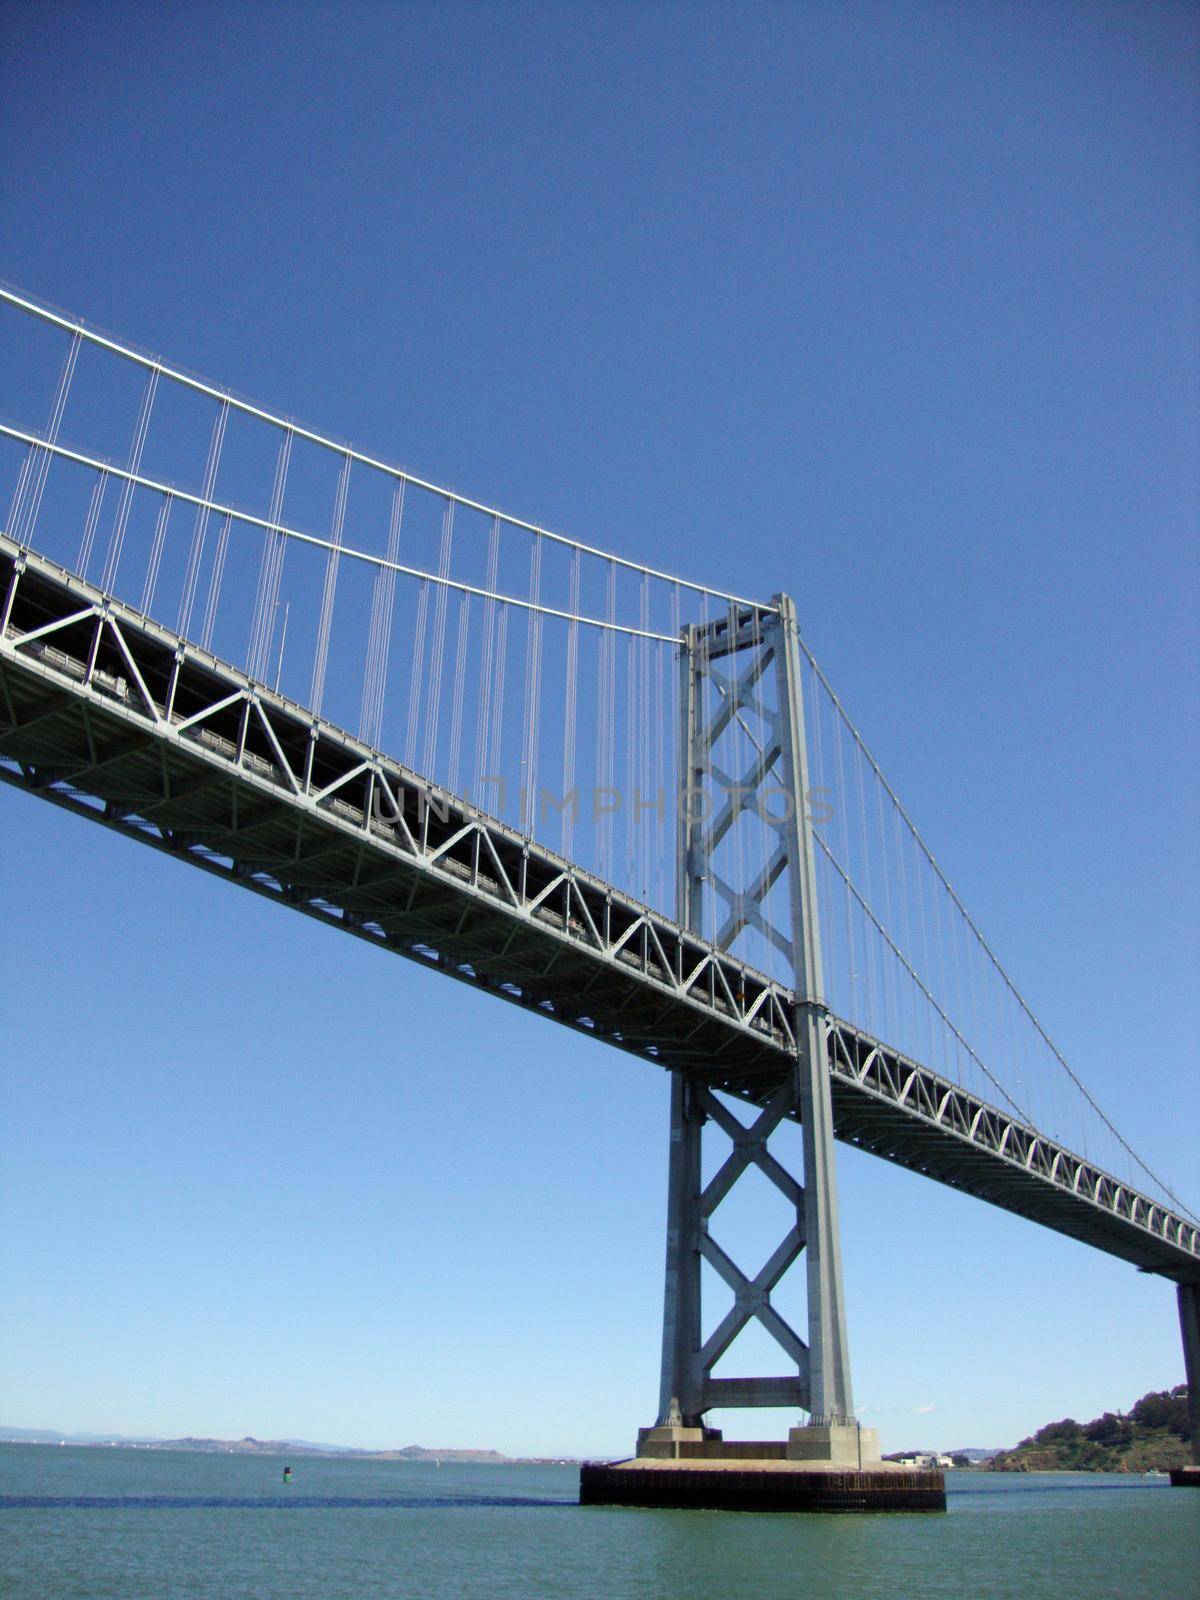 Bay Bridge spanning San Francisco Bay viewed from the water.